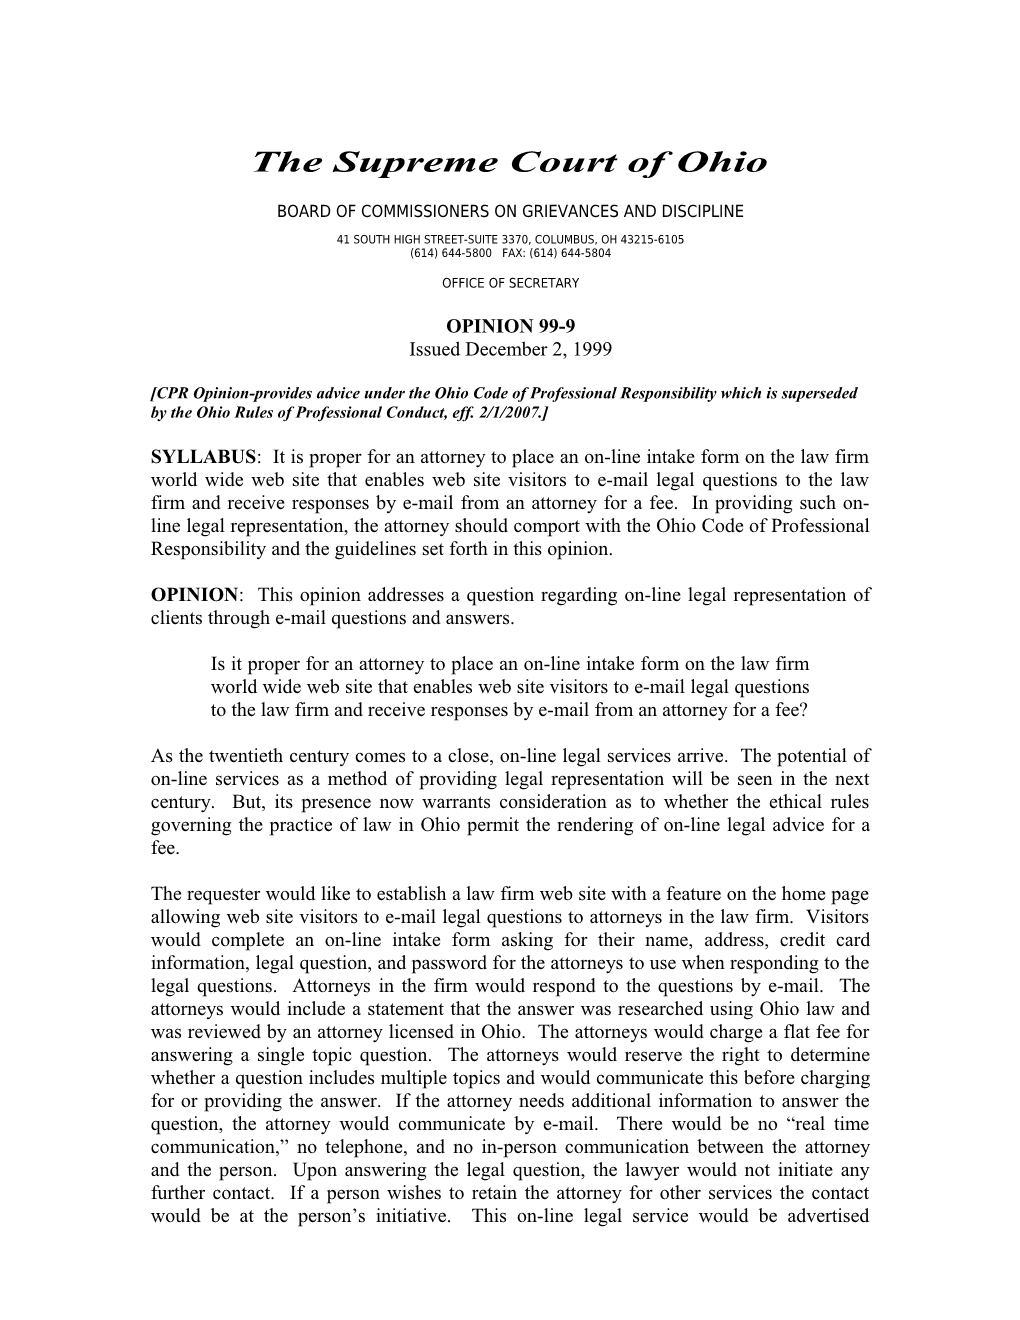 The Supreme Court of Ohio s29